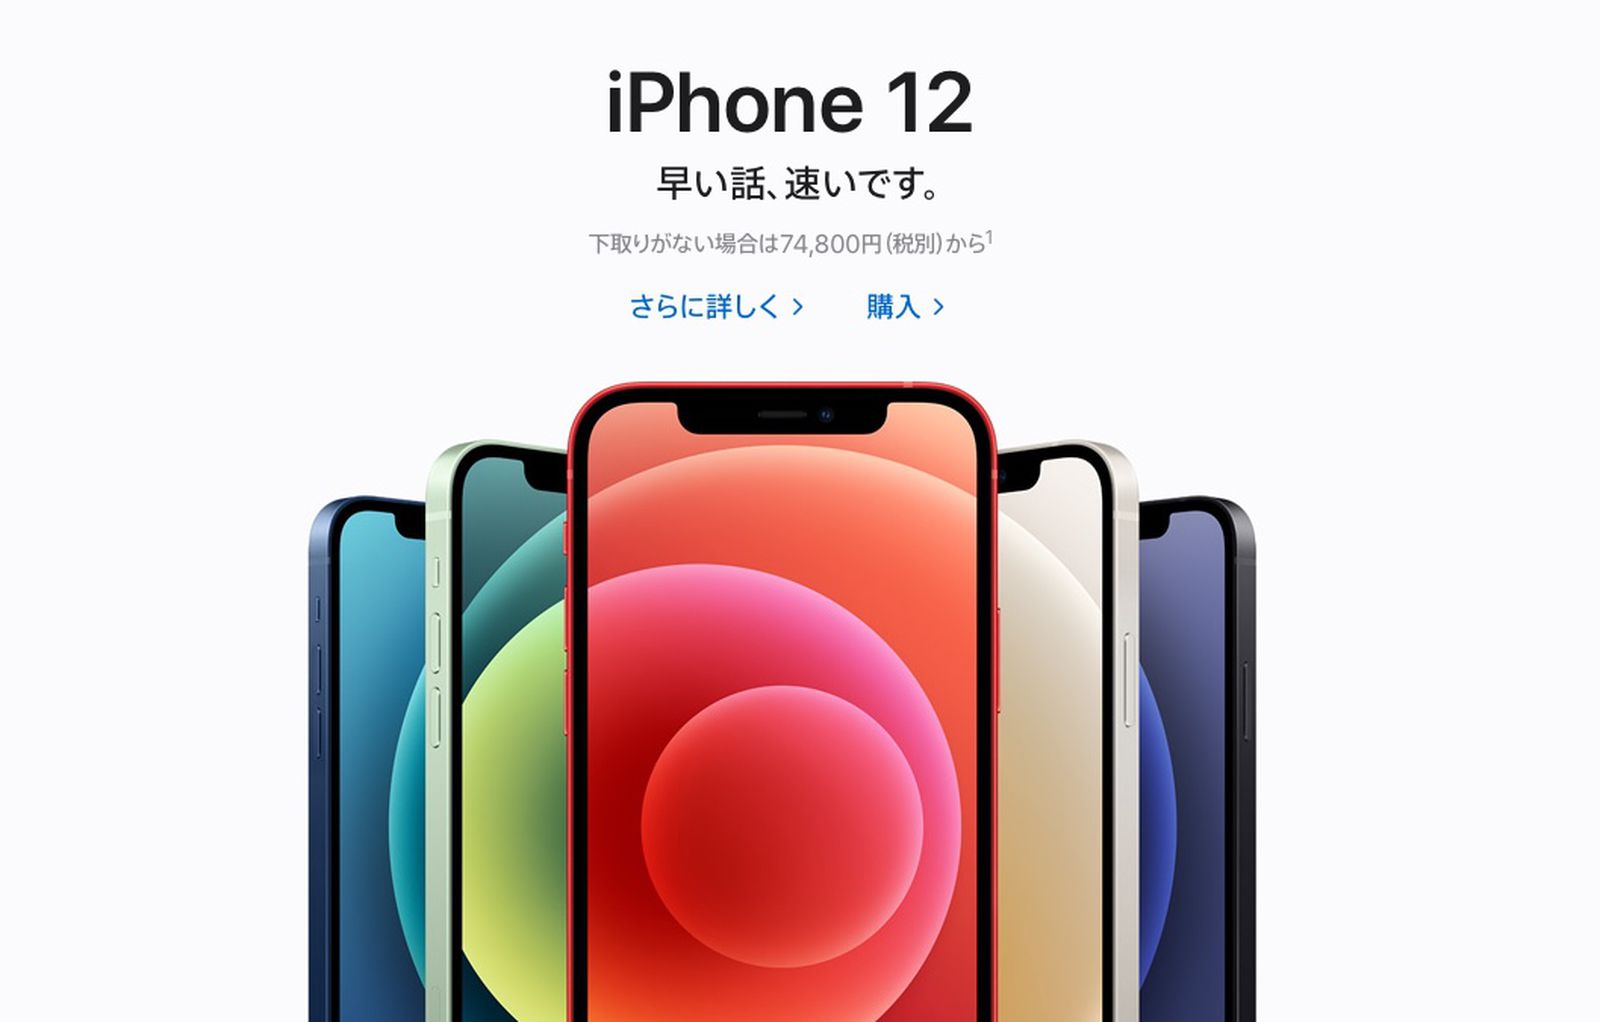 Apple dominated Japan’s smartphone market in 2020